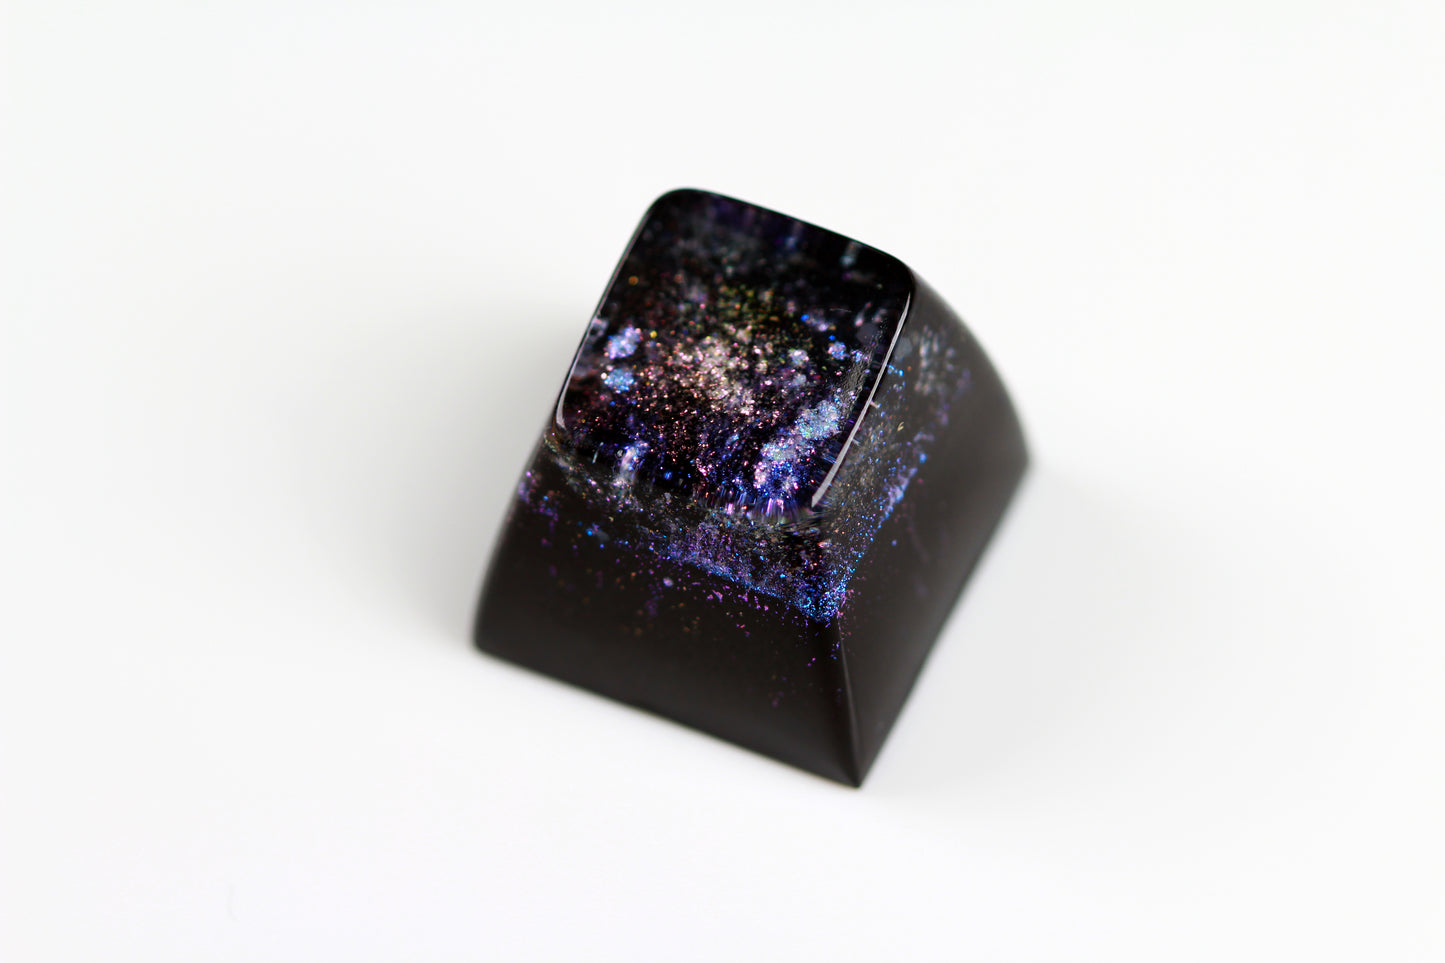 Gimpy SA Row 1 - Deep Field Opal Nebula 2 - PrimeCaps Keycap - Blank and Sculpted Artisan Keycaps for cherry MX mechanical keyboards 